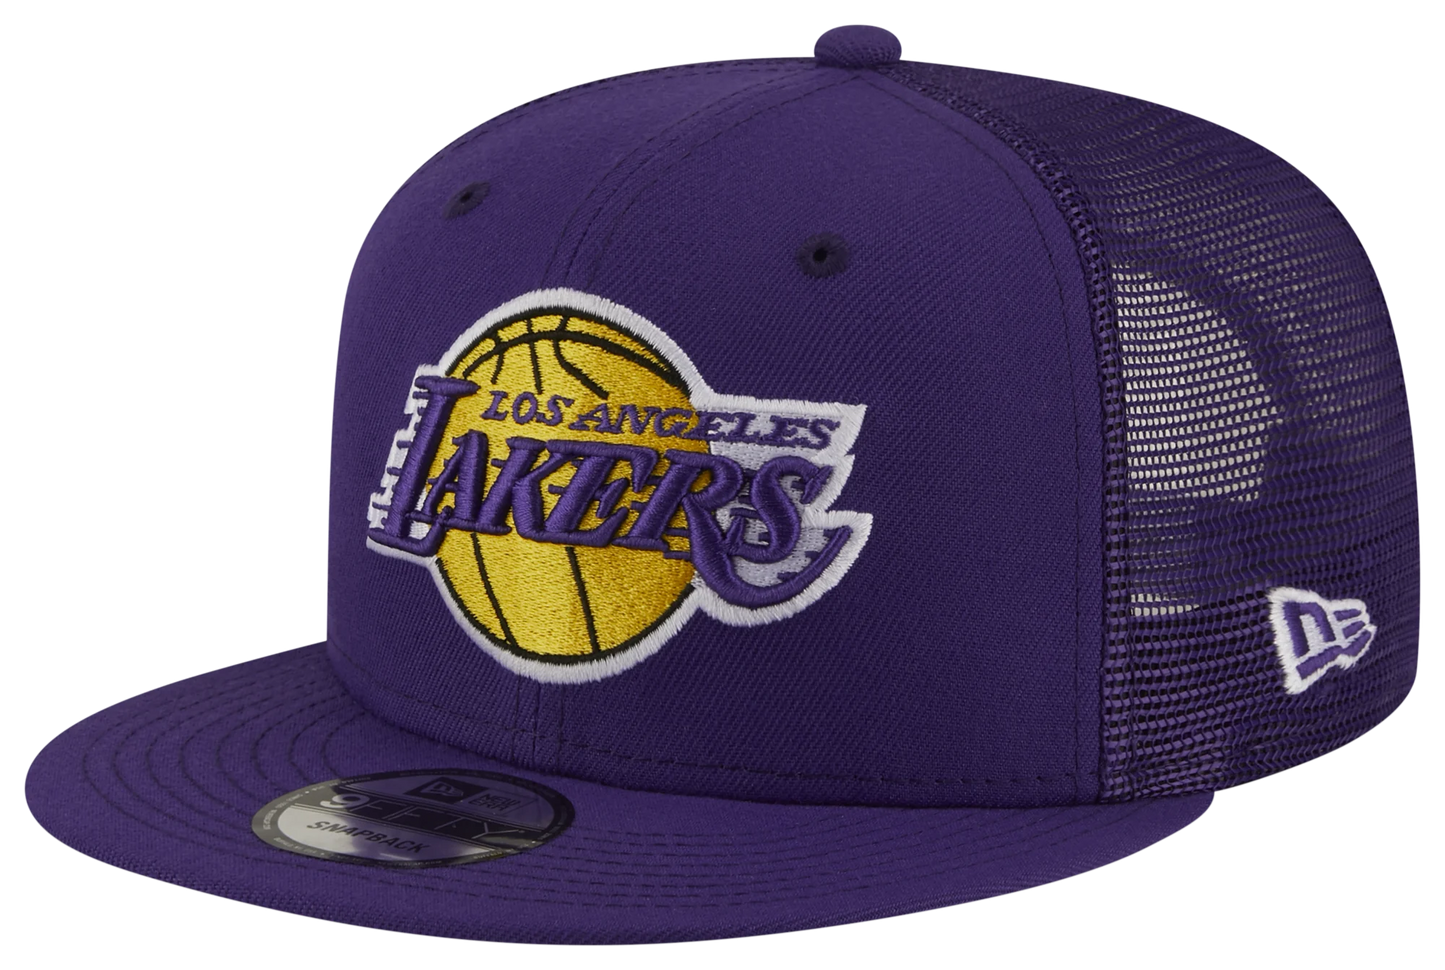 New era Lakers